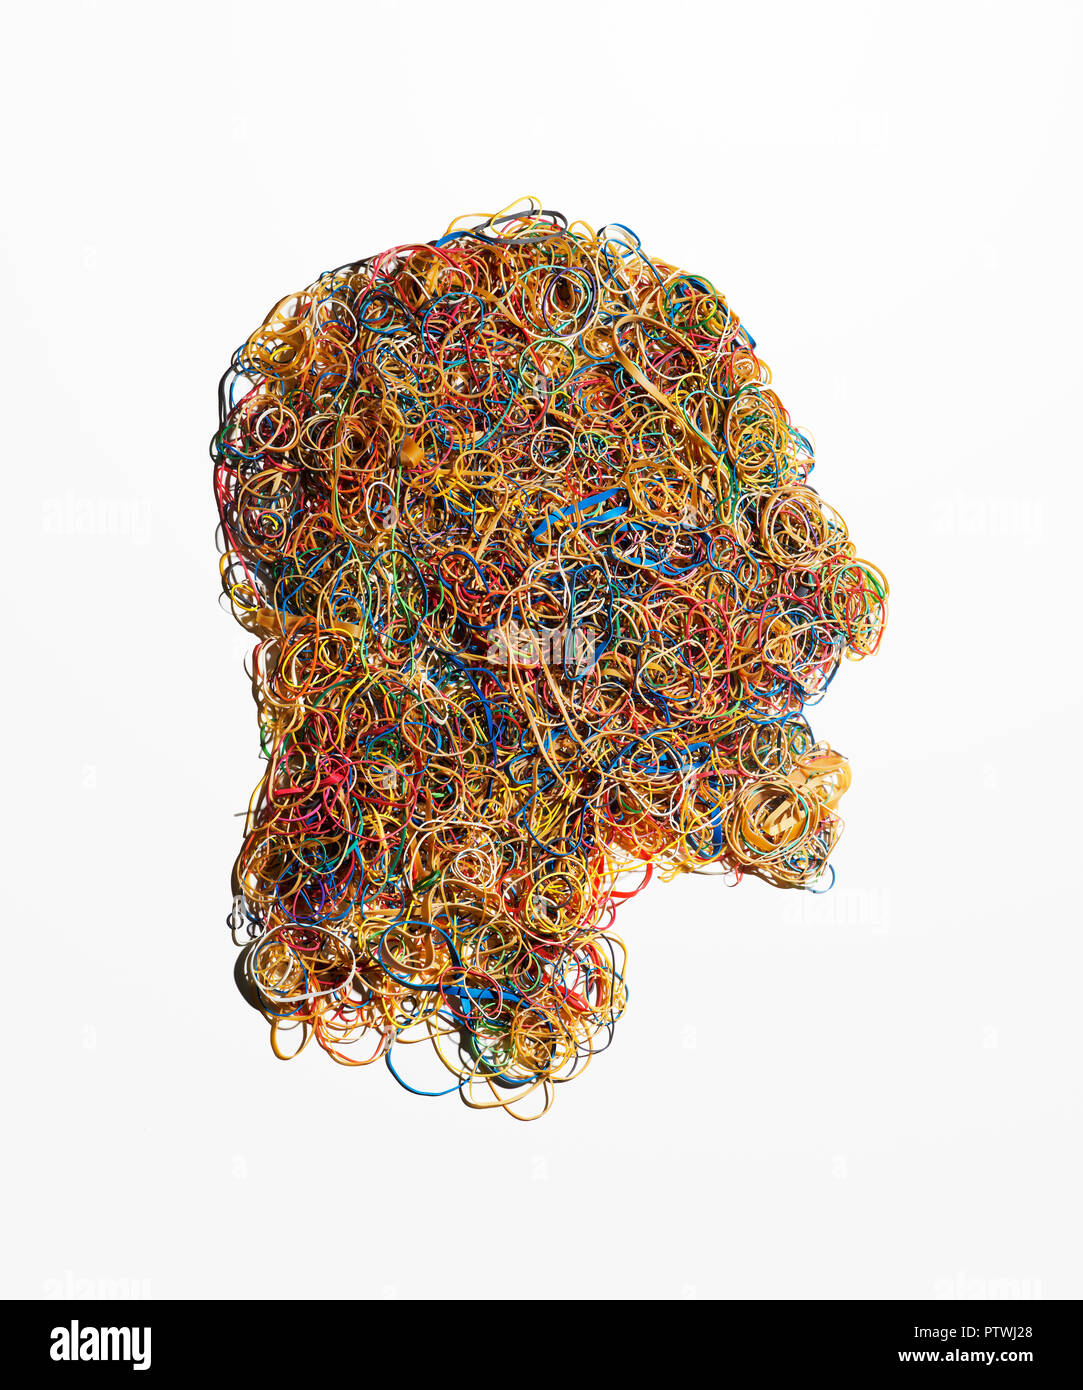 La forma de cabeza humana hecha de bandas de goma elástica Foto de stock